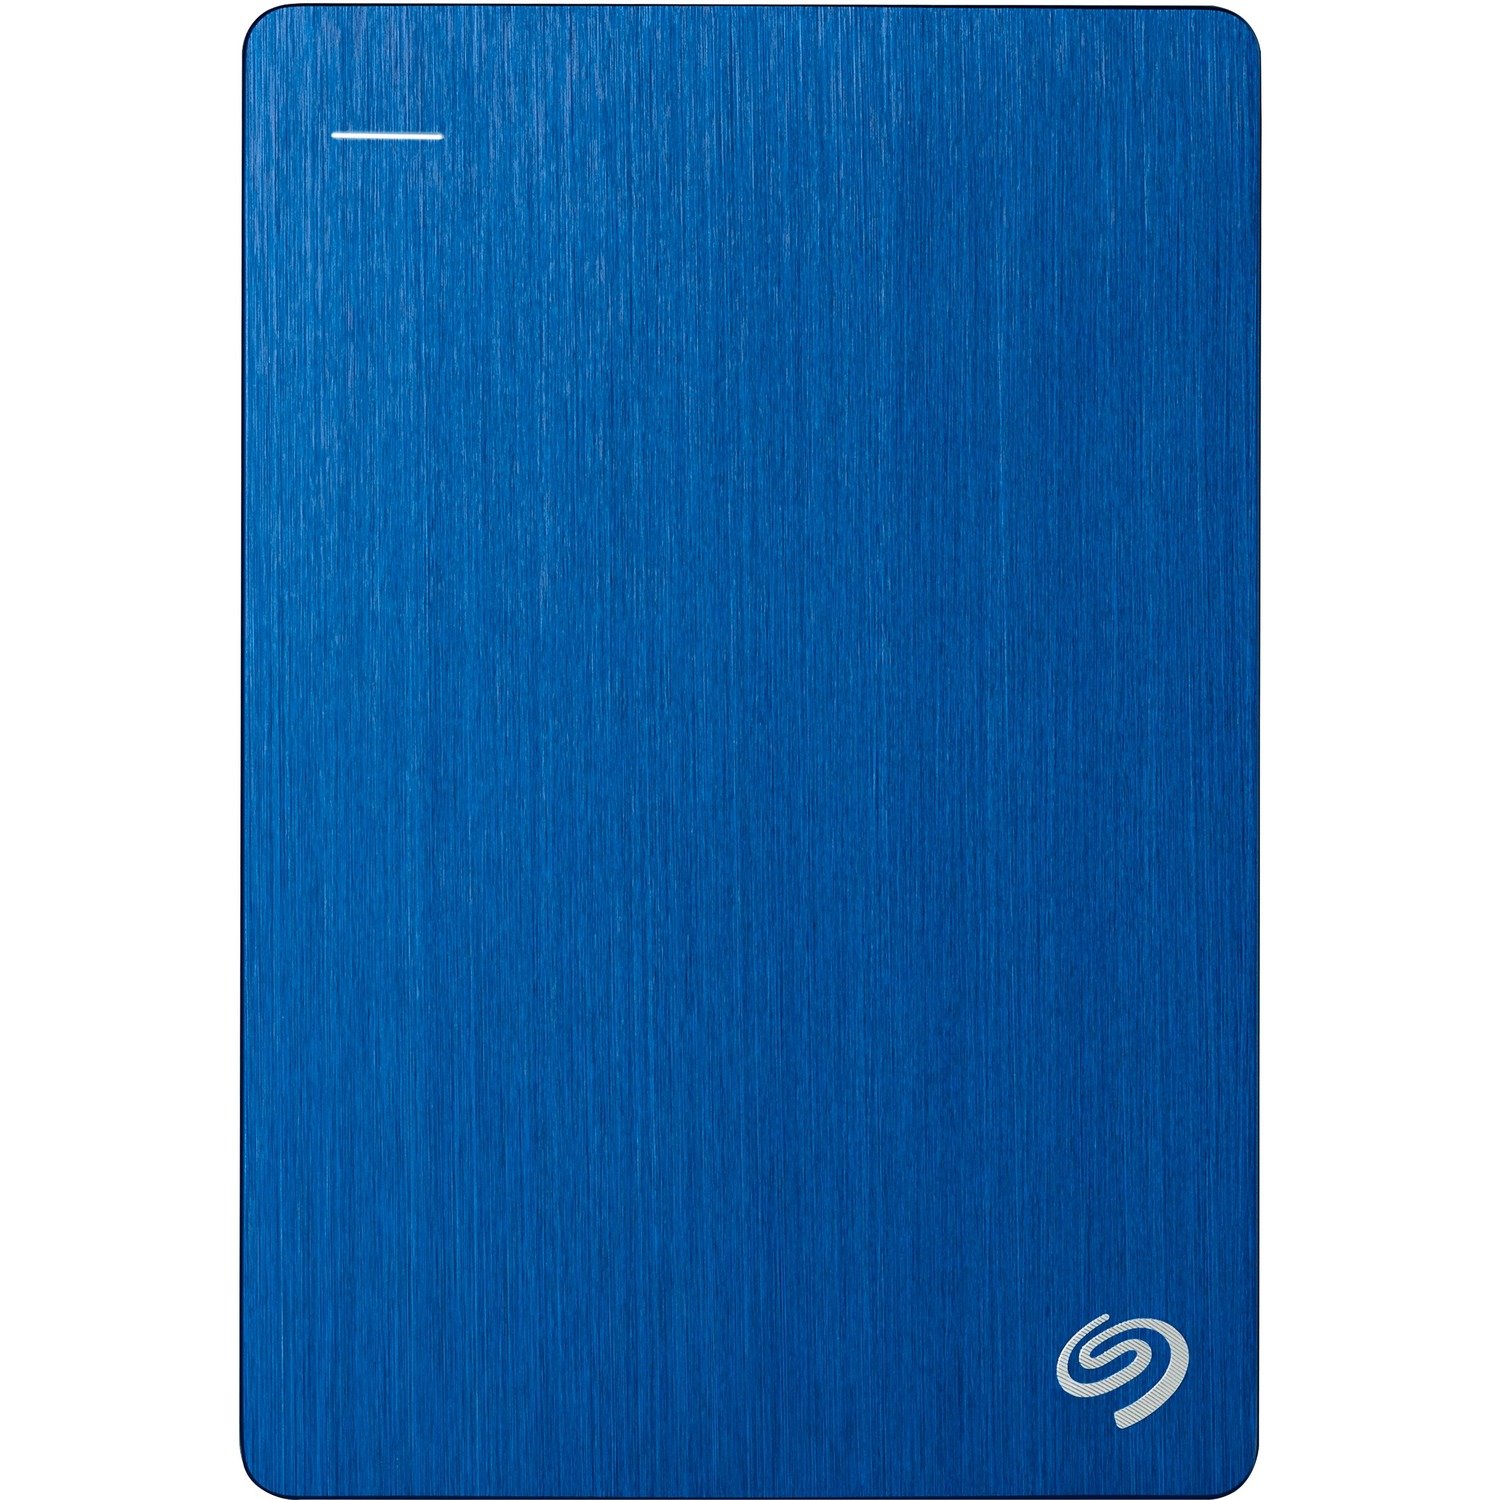 Seagate Backup Plus STDR5000102 5 TB Portable Hard Drive - External - Blue